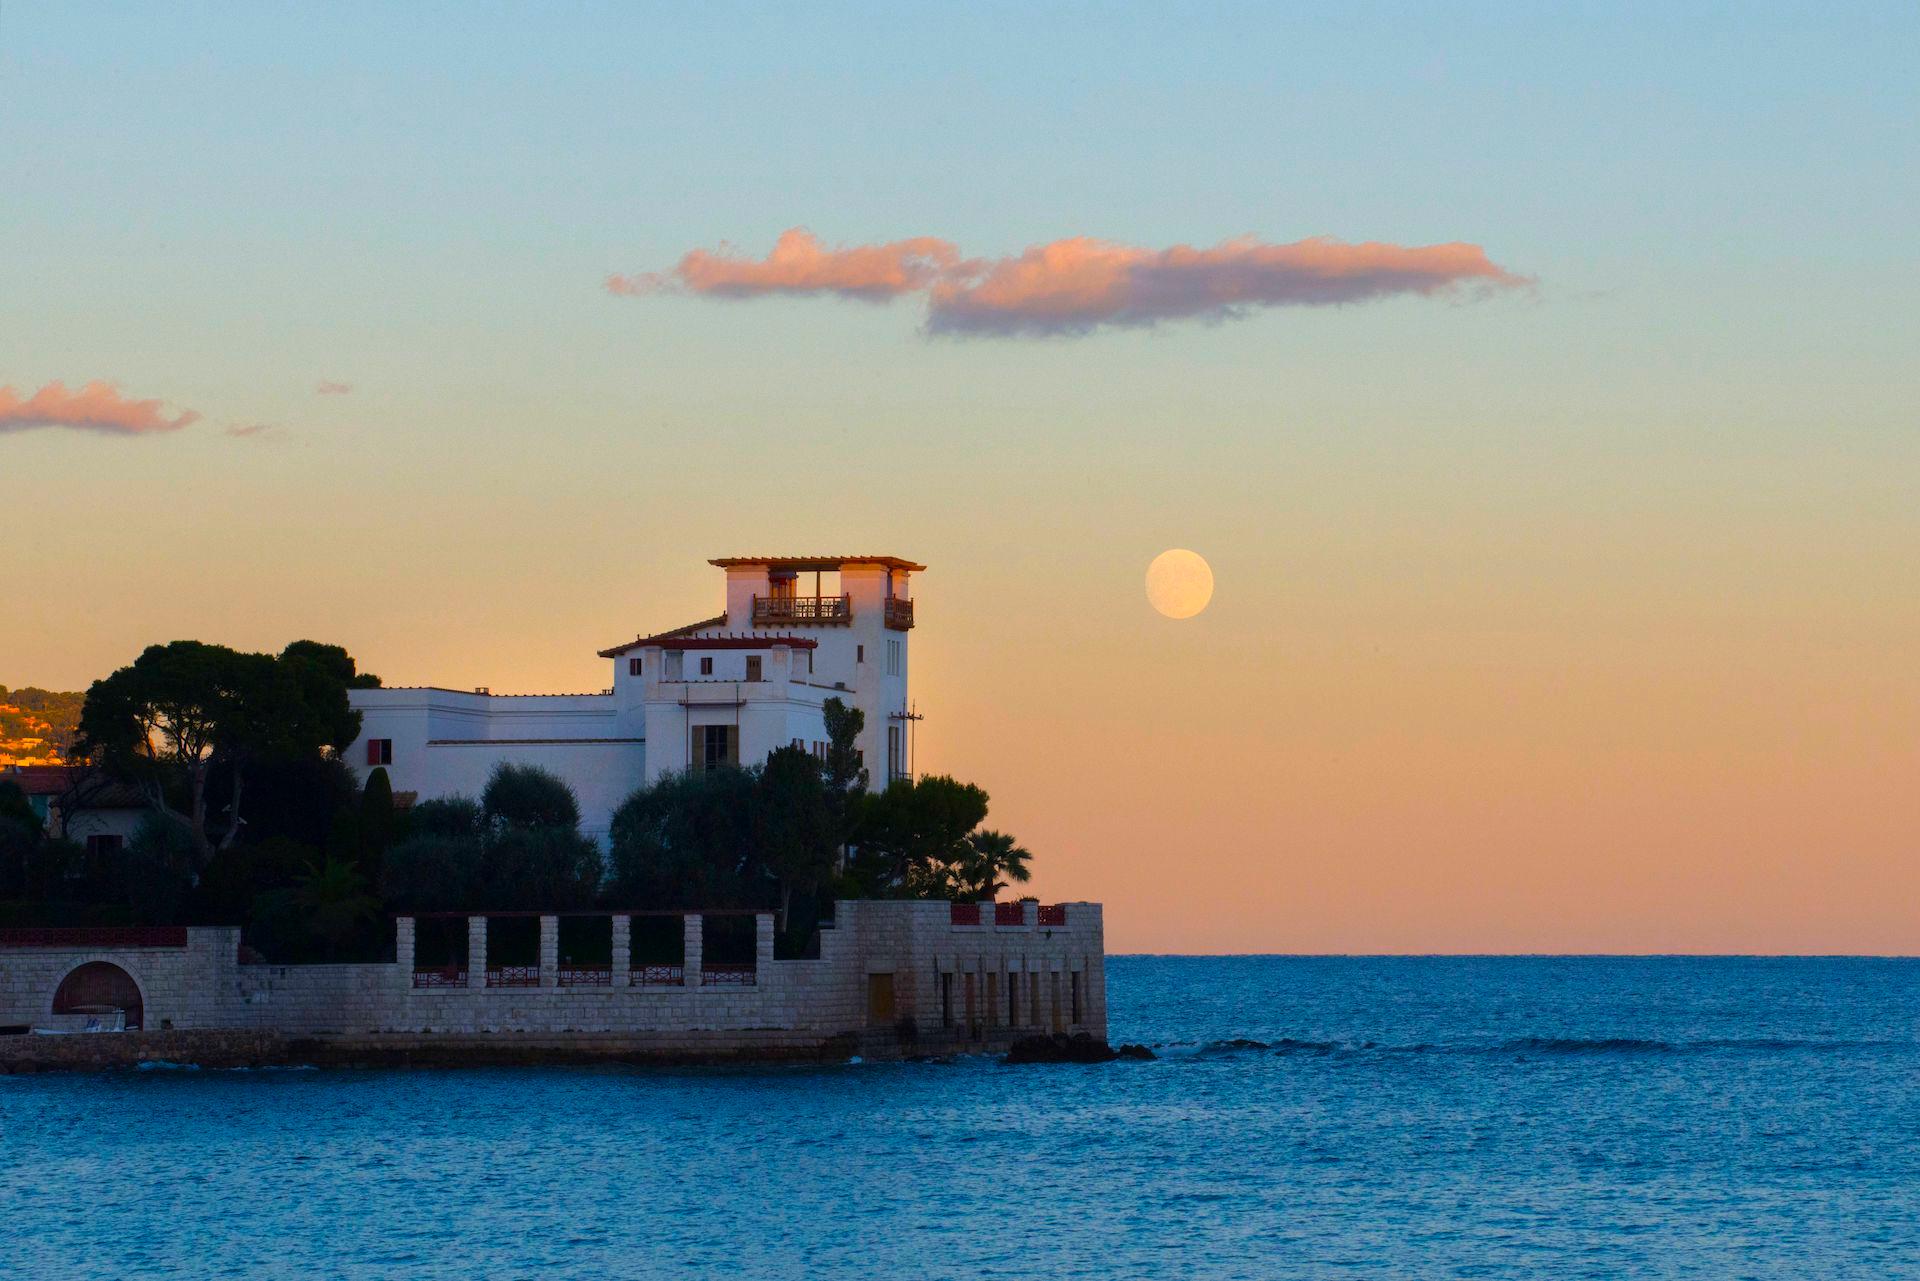 Villa Kerylos grece antique patrimoine beaulieu sur mer